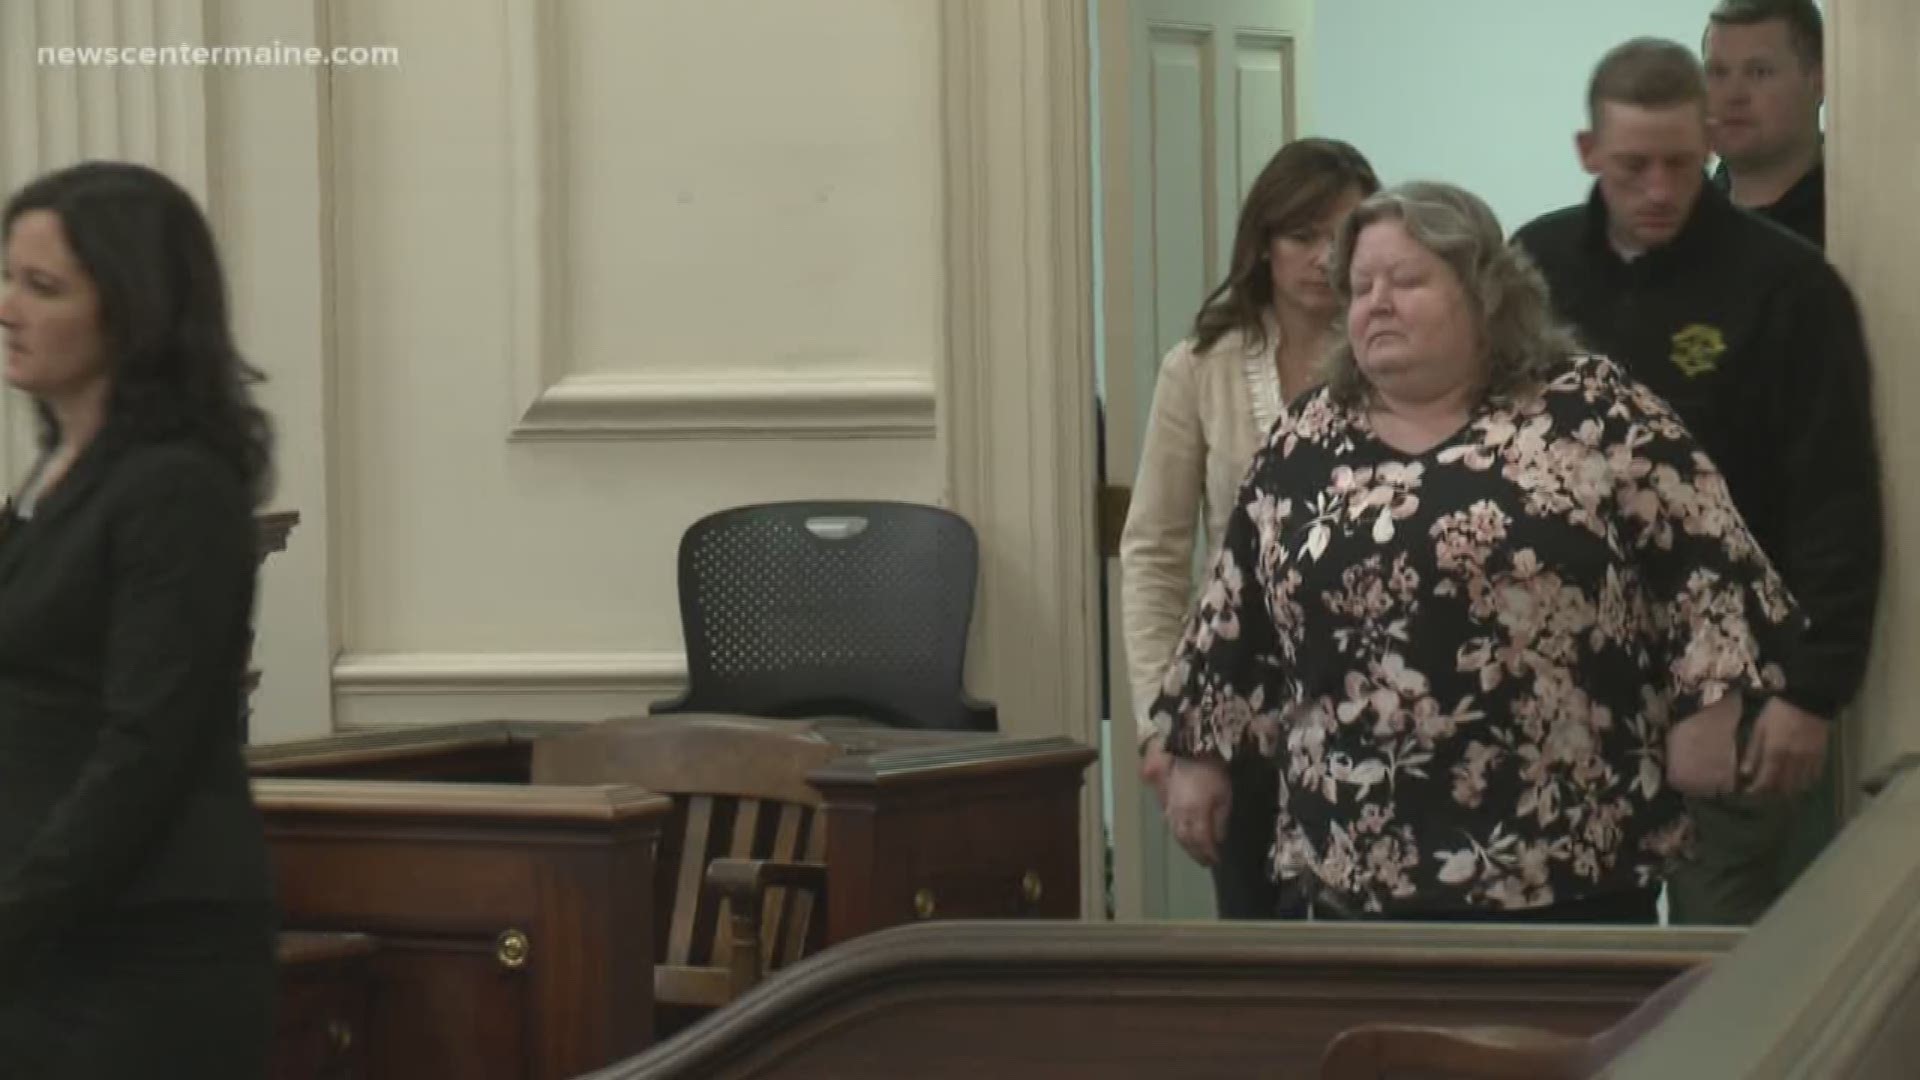 Acton woman who pleaded guilty to stabbing seeks plea change